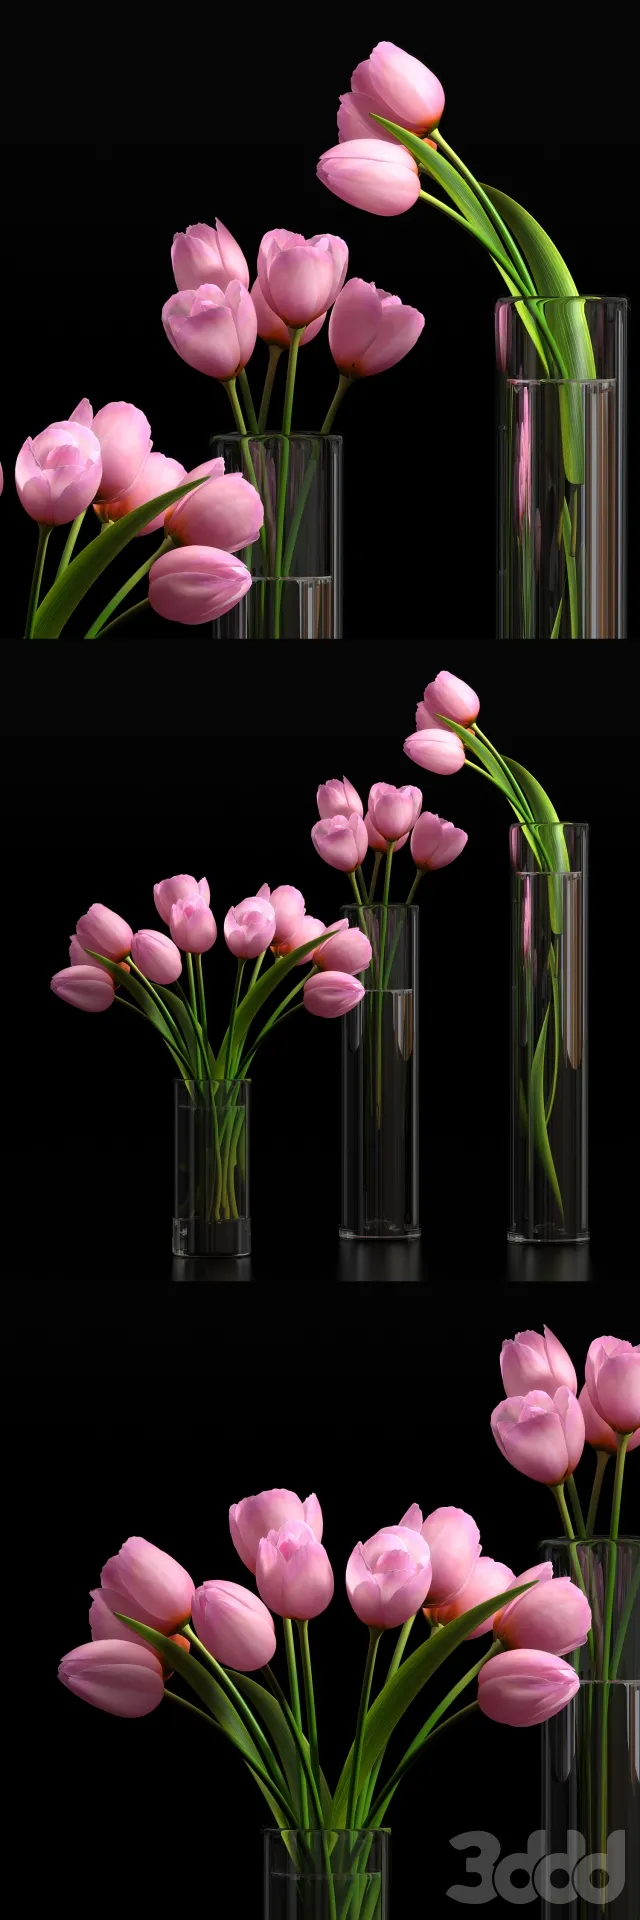 PLANT 3D MODELS – FLOWER 3D MODELS – 434